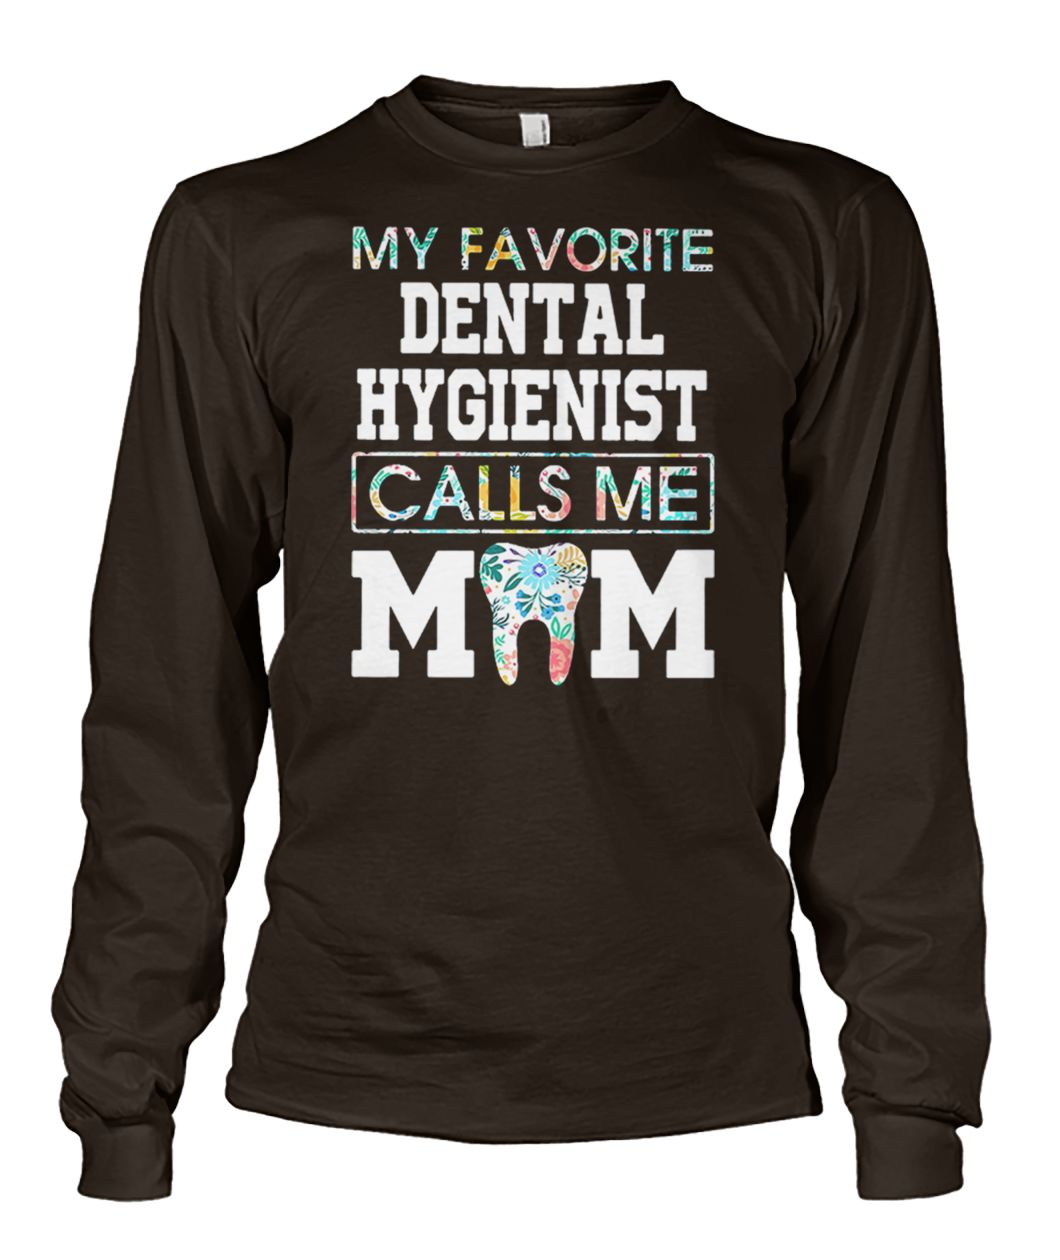 My favorite dental hygienist calls me mom unisex long sleeve